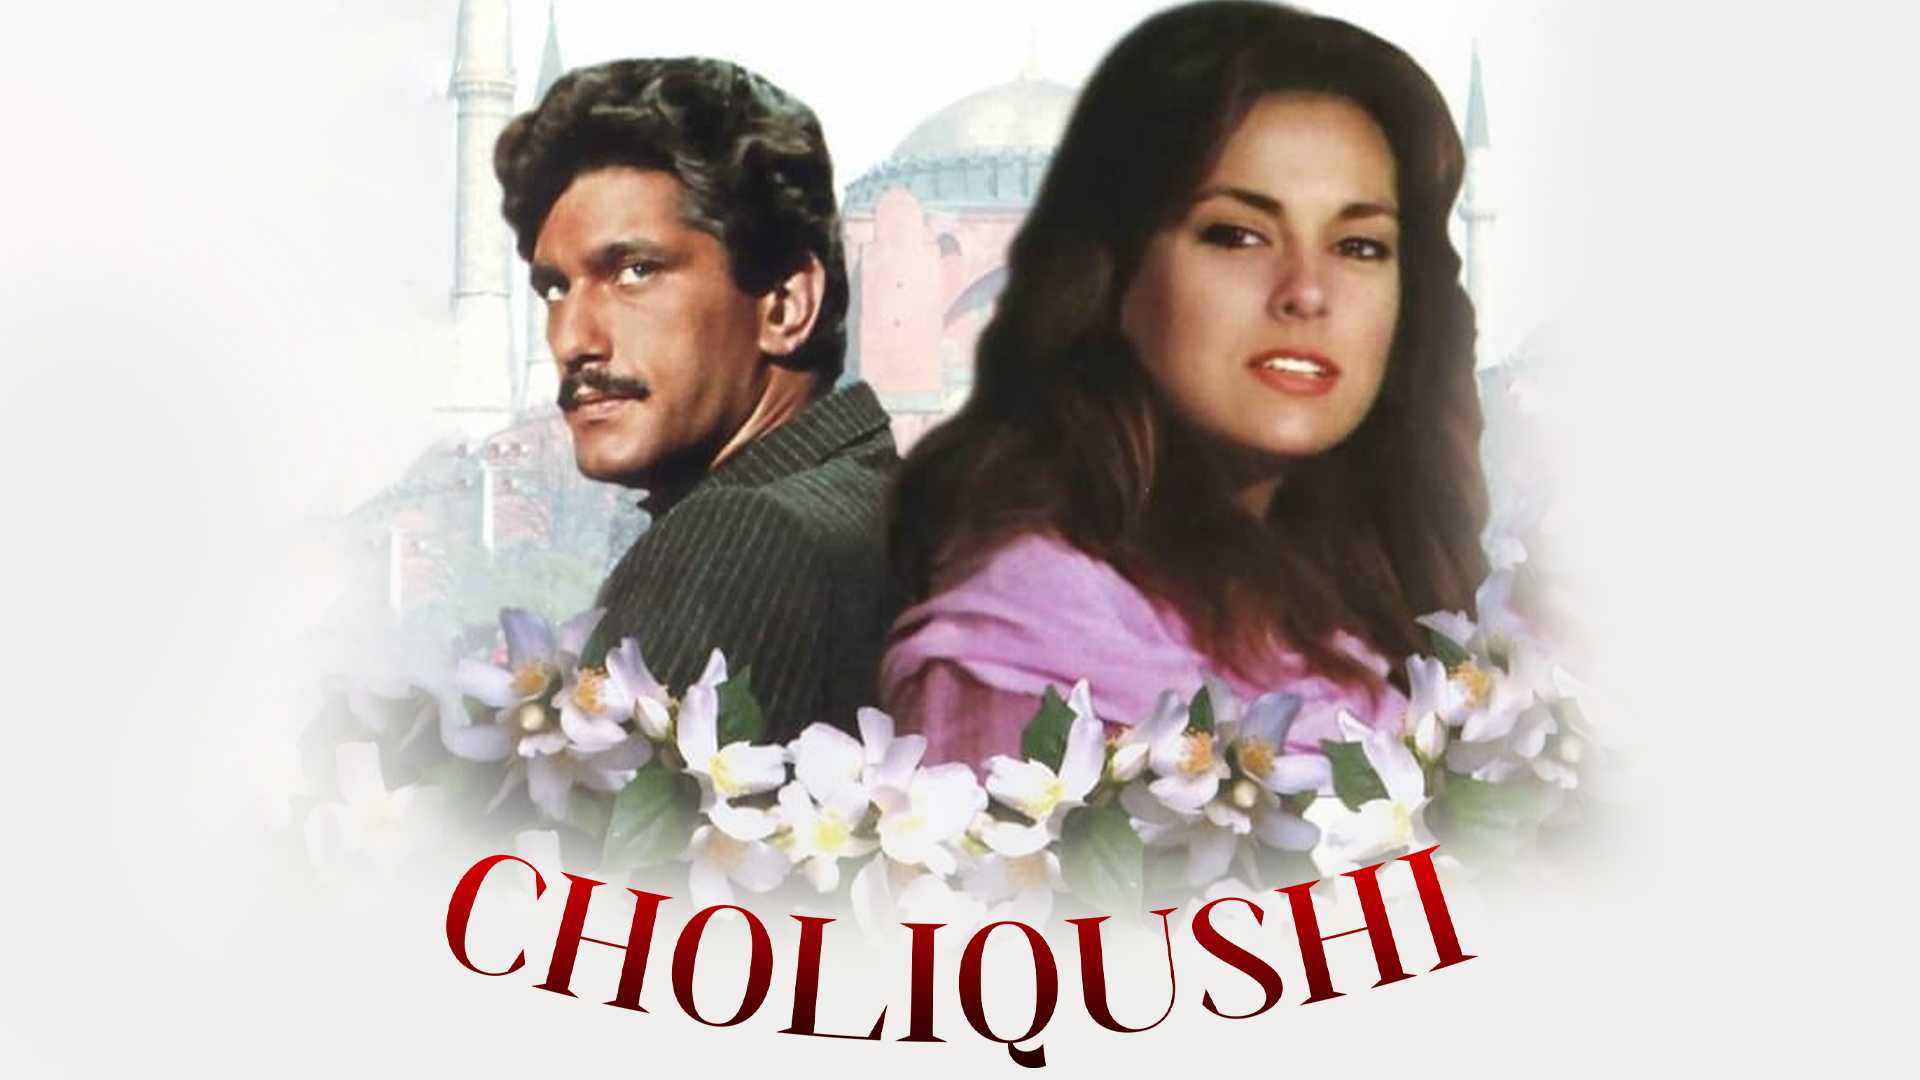 Choliqushi